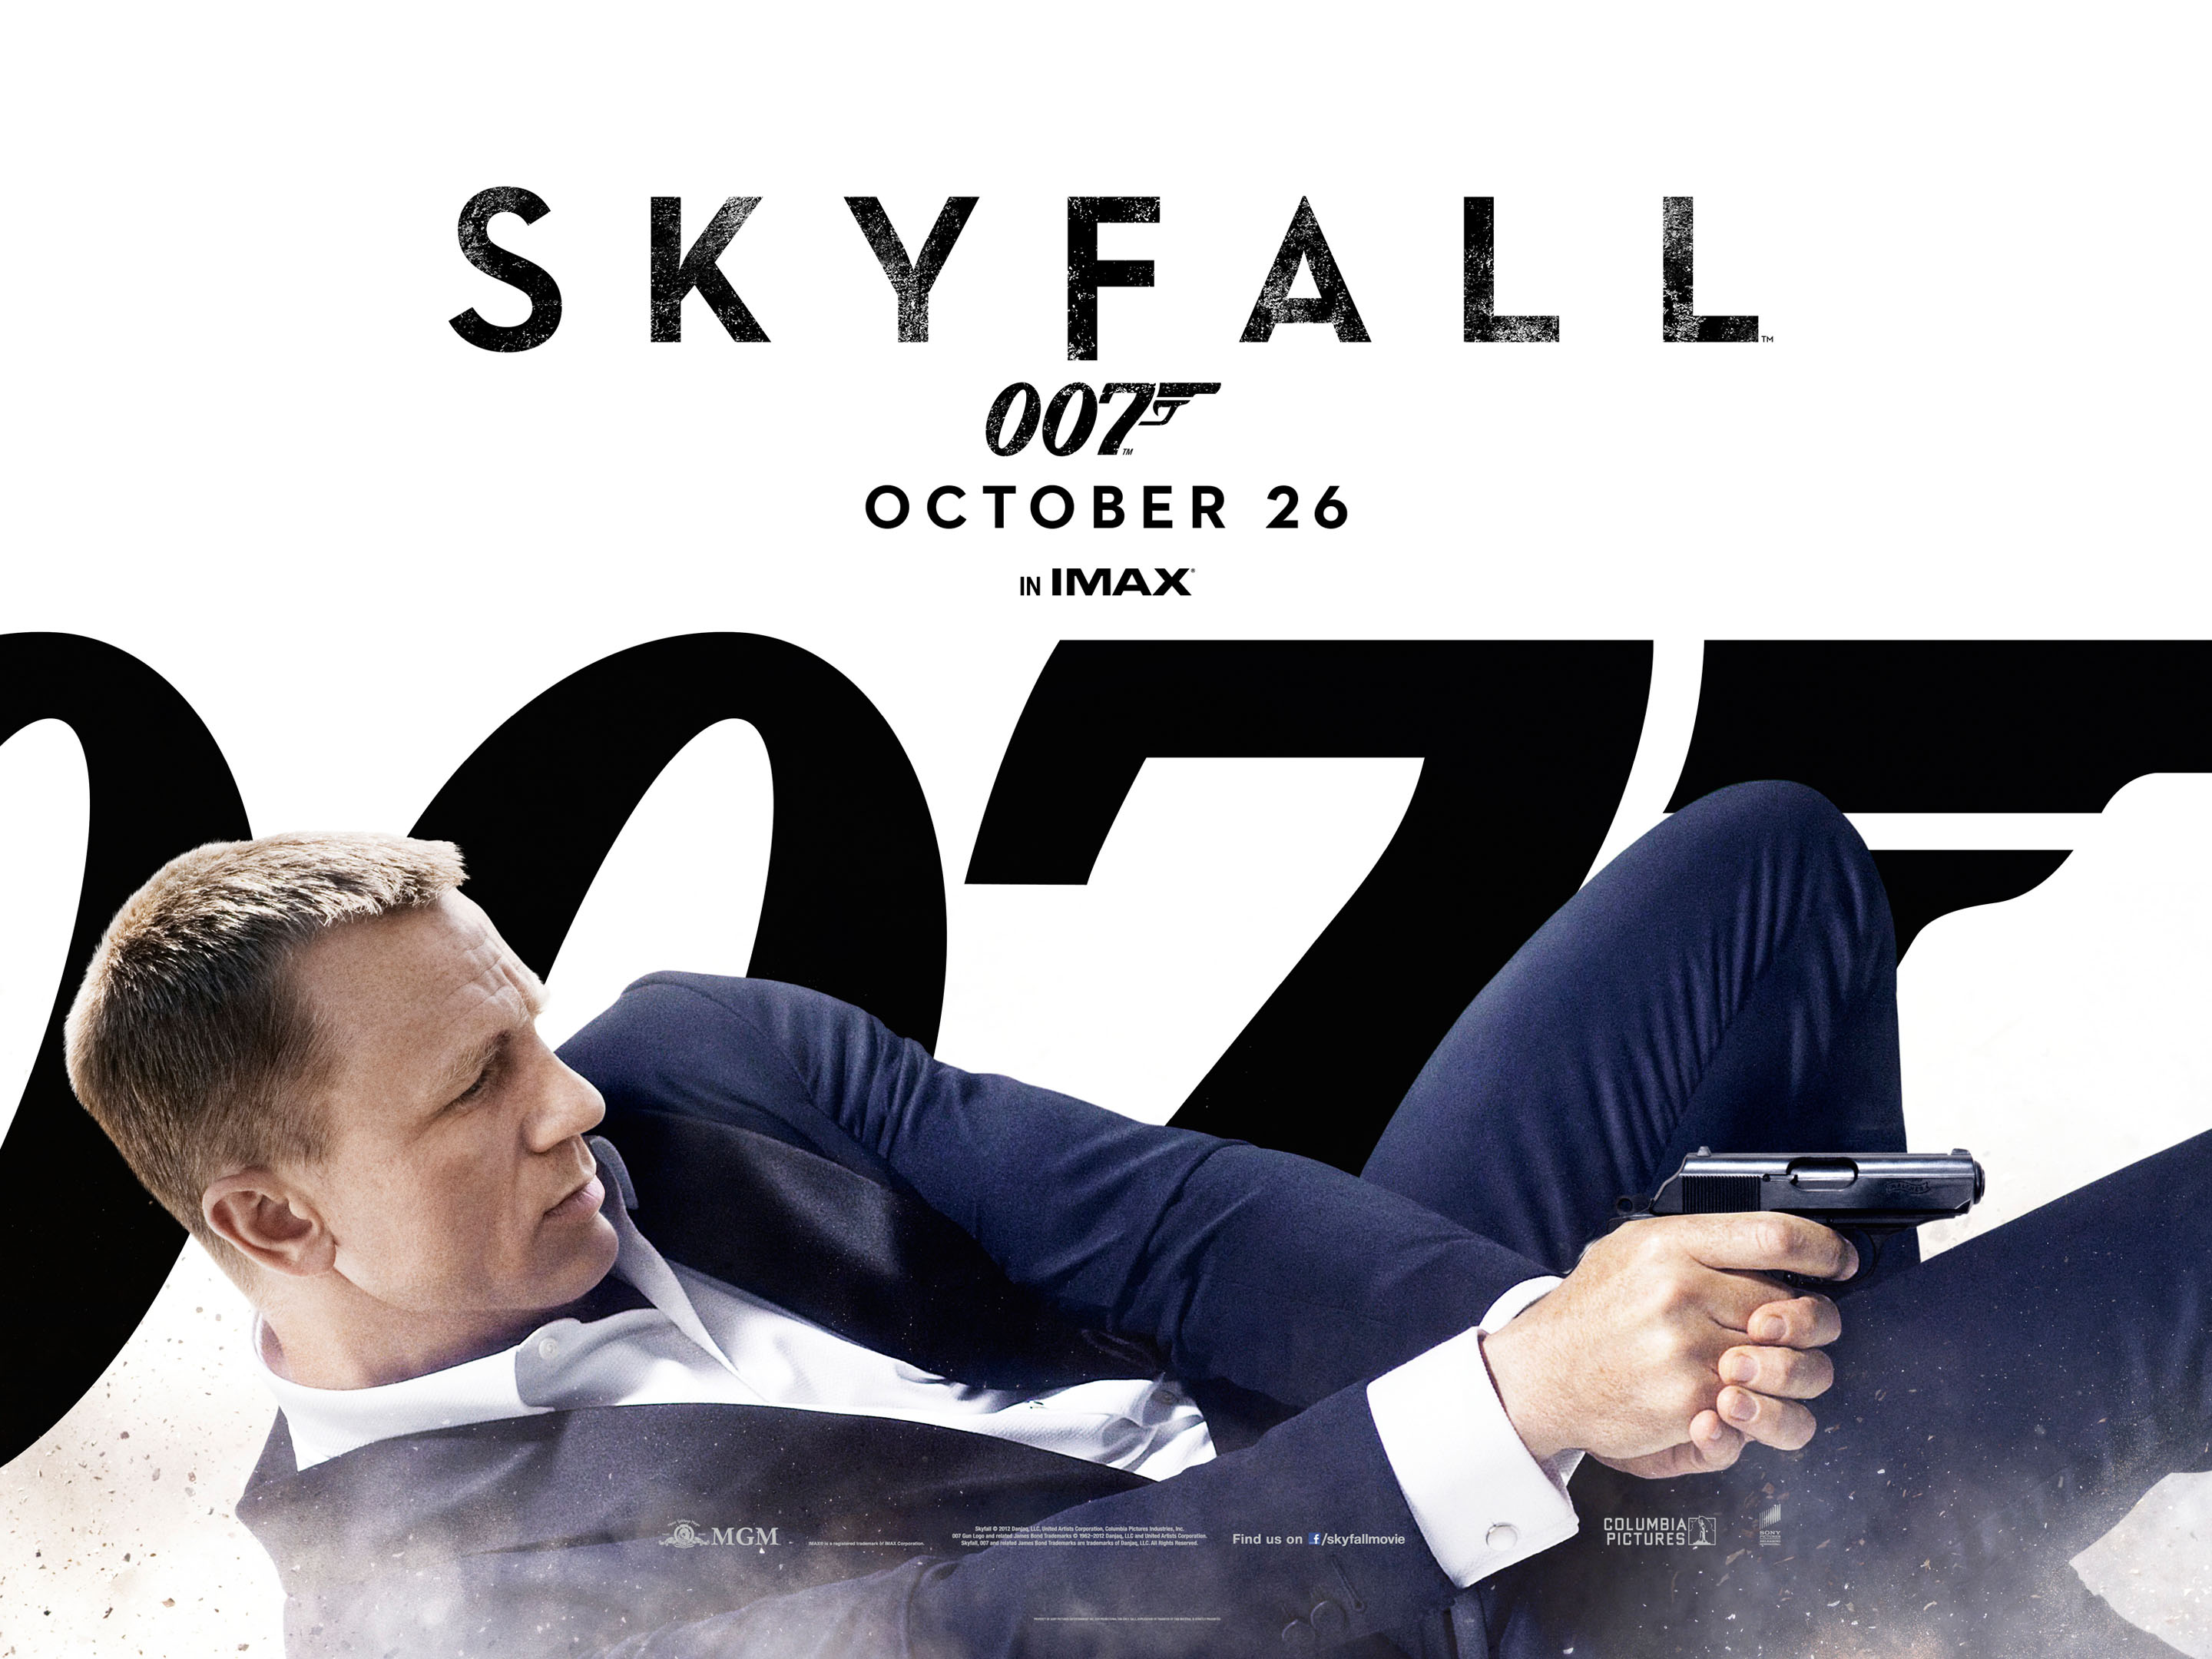 Skyfall-poster-with-Daniel-Craig-as-James-Bond-by-Greg-Williams-0011.jpg